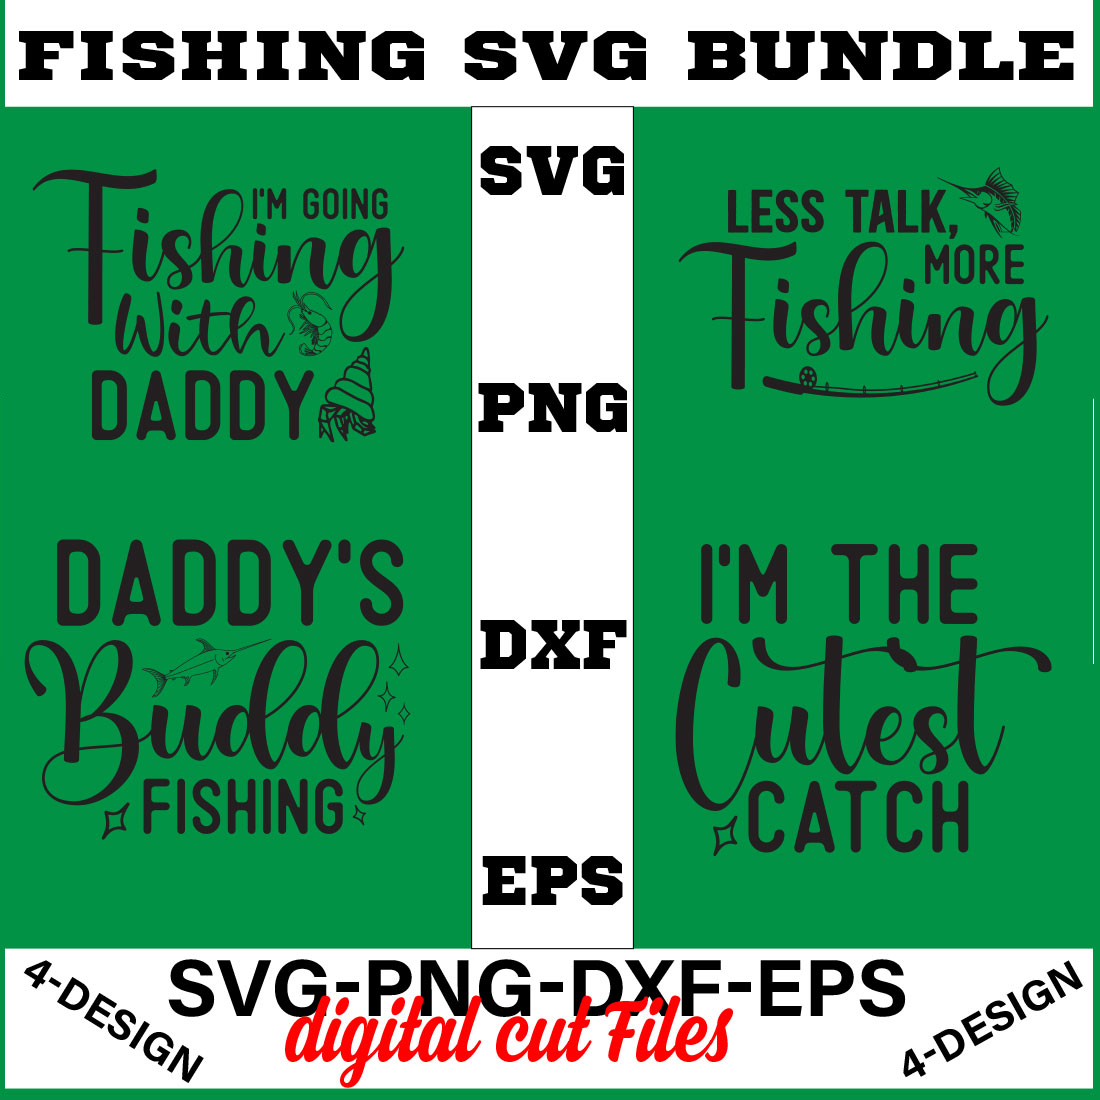 Fishing Design Bundle PNG ONLY, SVG bundle, Fishing svg, Fishing life Volume-03 cover image.